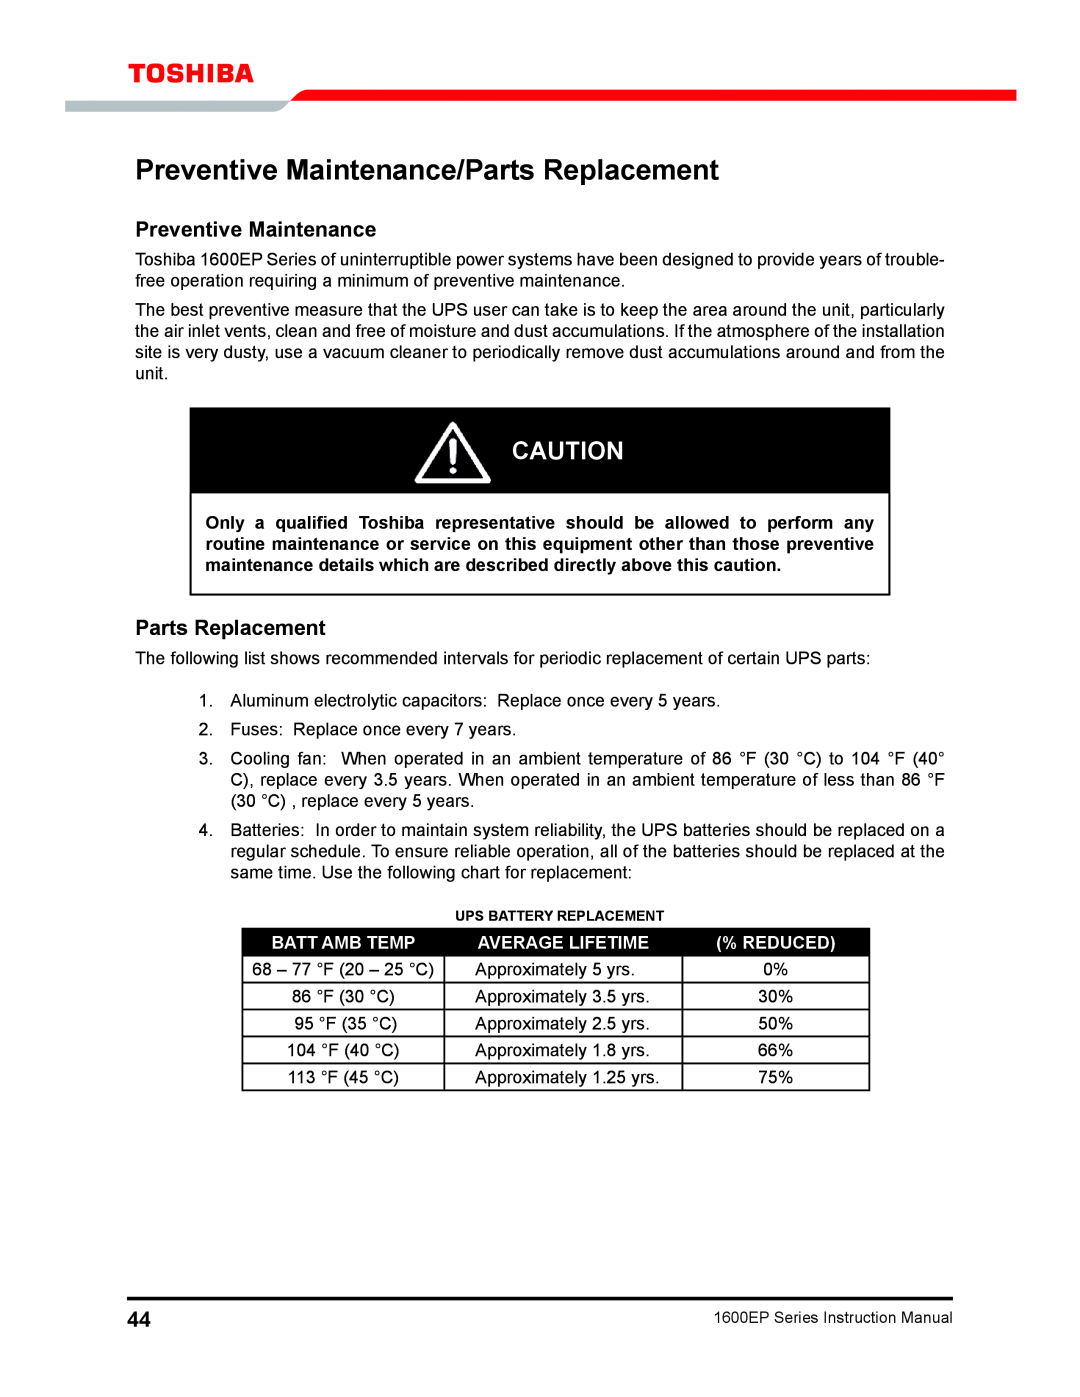 Toshiba 1600EP Series manual Preventive Maintenance/Parts Replacement, Batt Amb Temp, Average lifetime, Reduced 